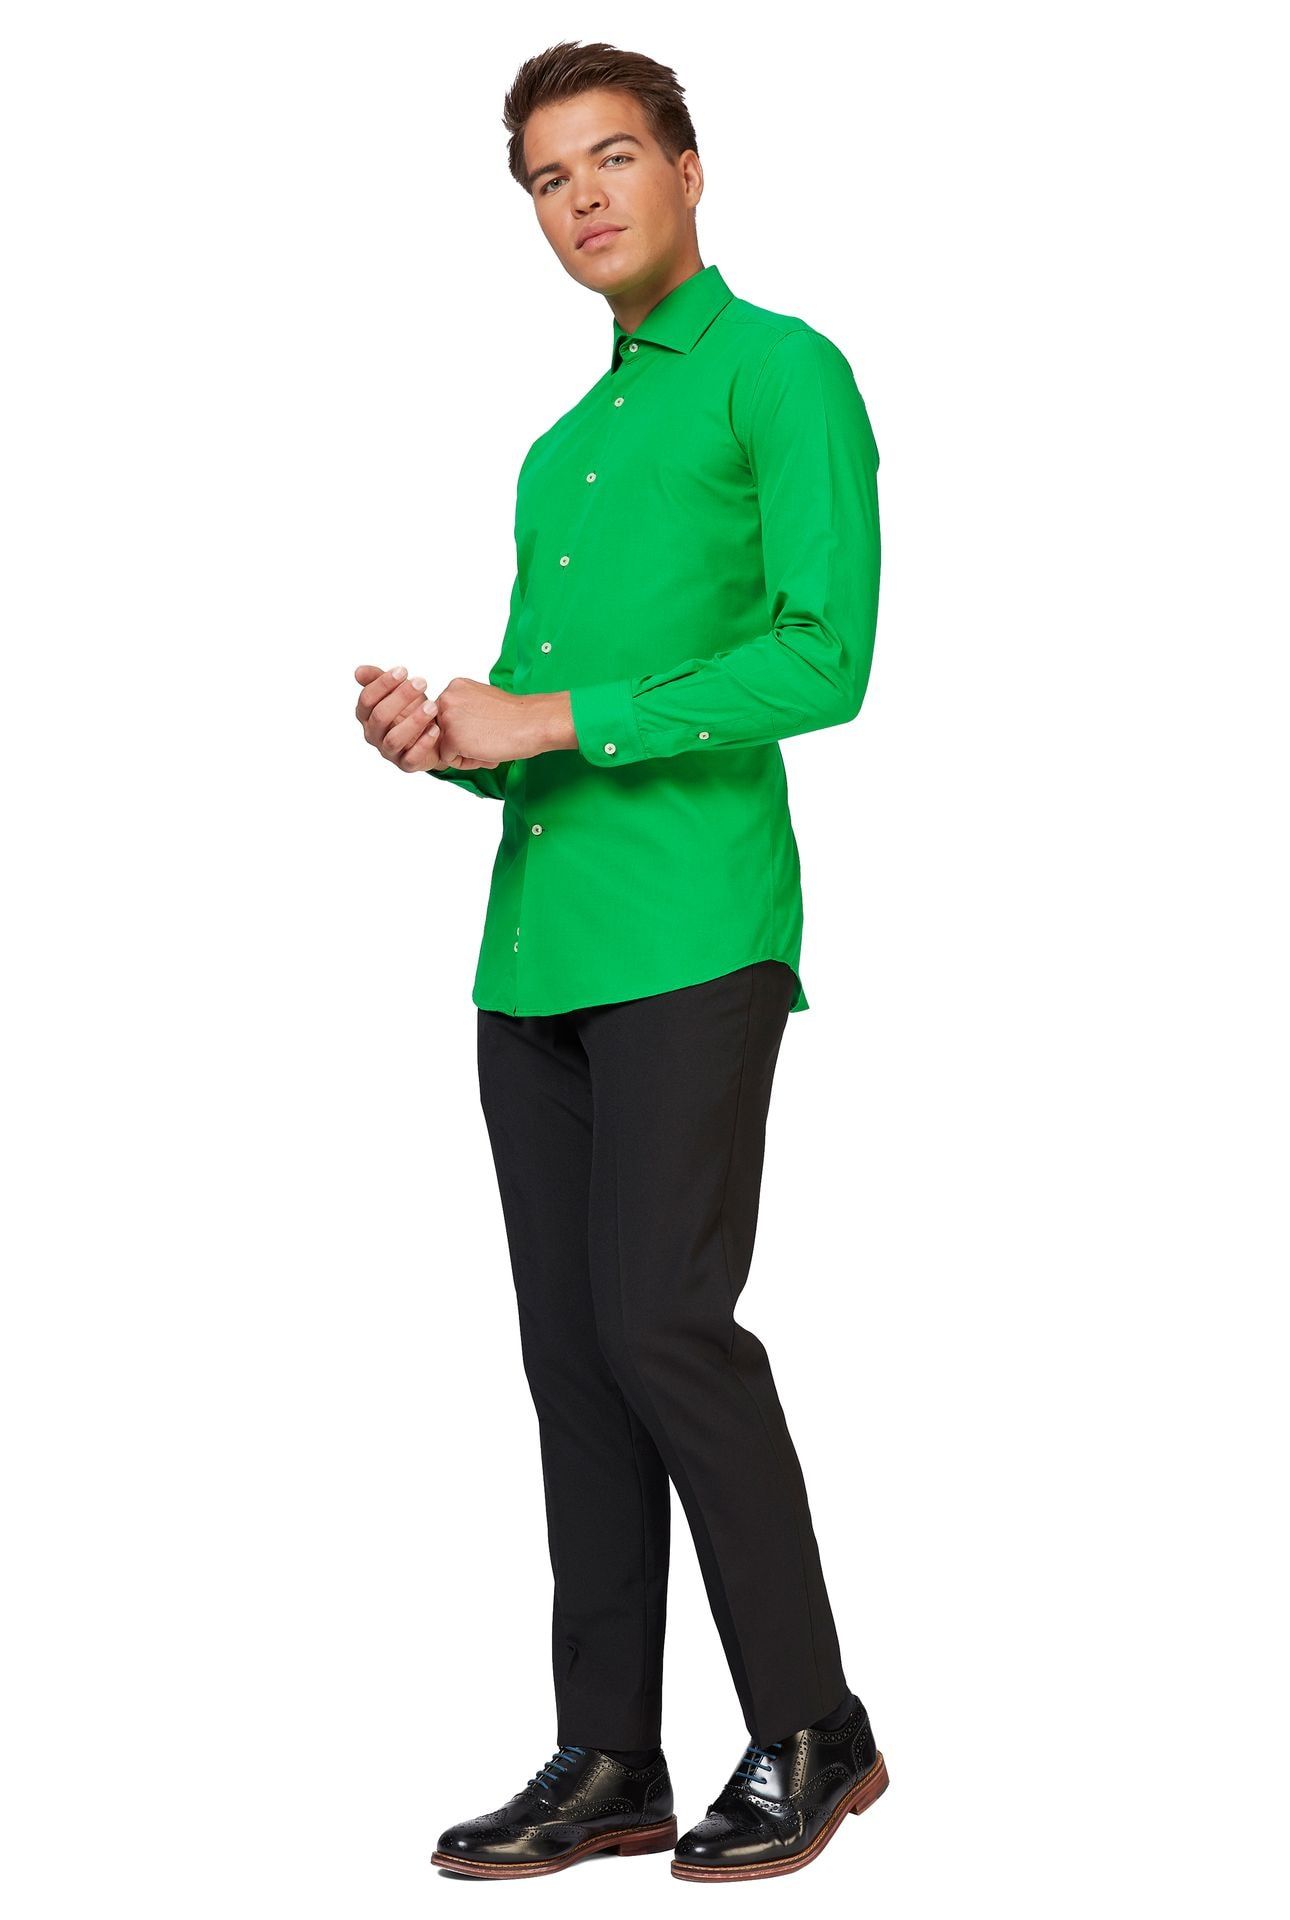 Opposuits Evergreen blouse